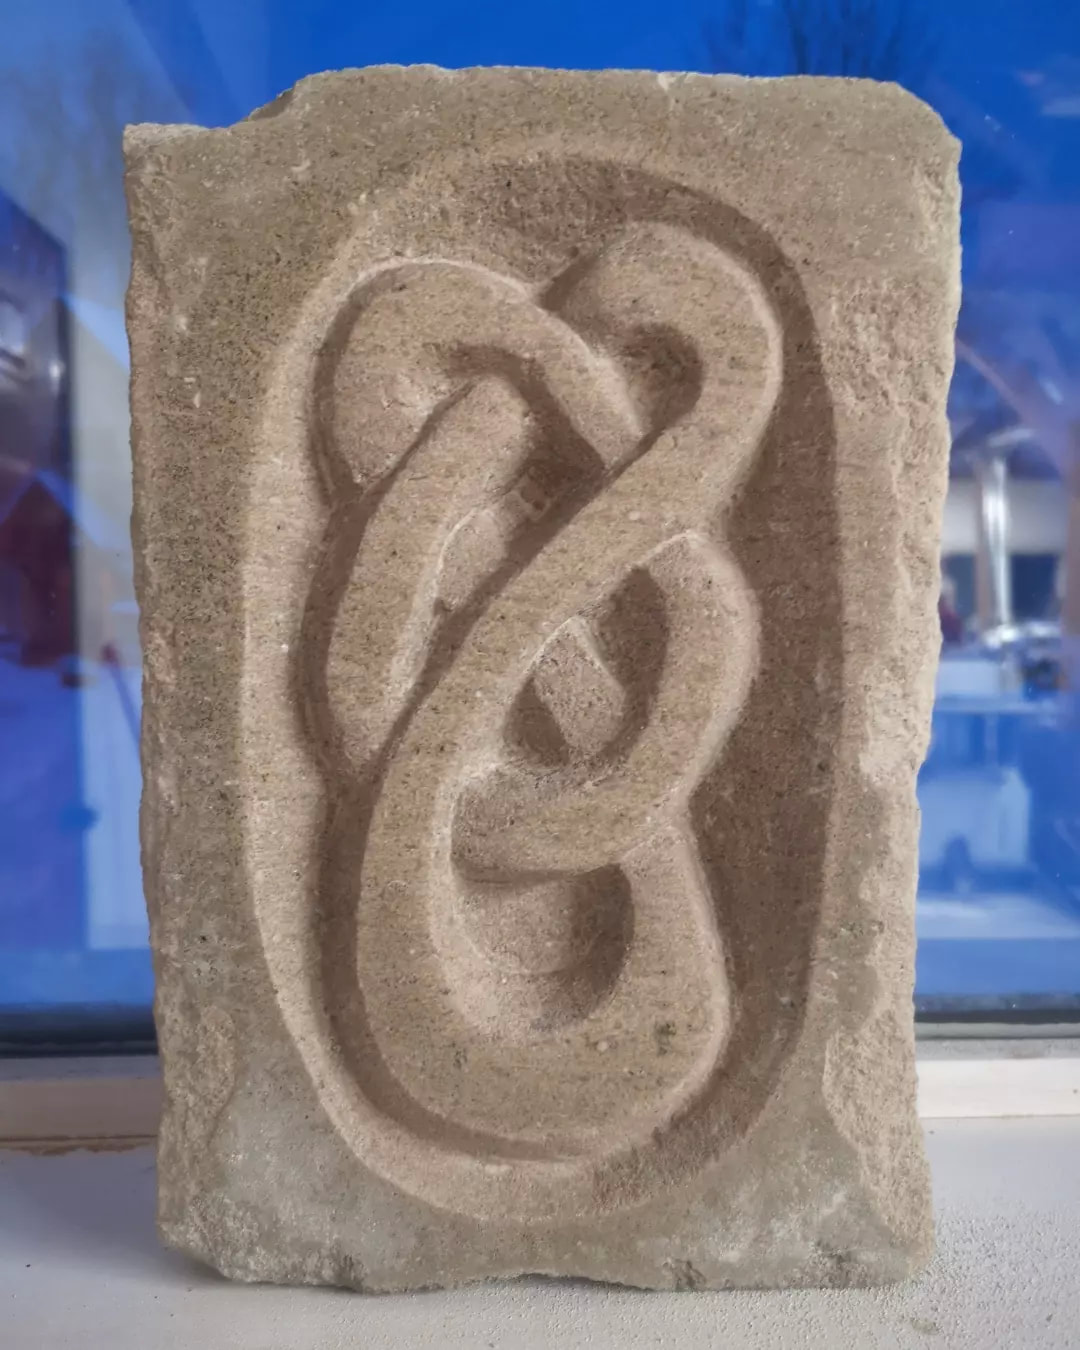 Carved Celtic design in stone slab